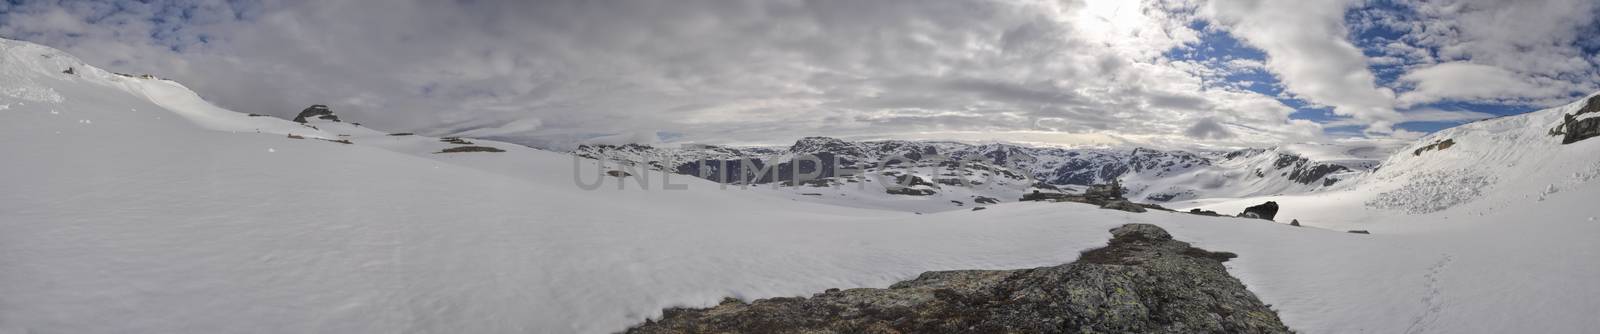 Scenic panorama of snowy landscape near Trolltunga in Norway